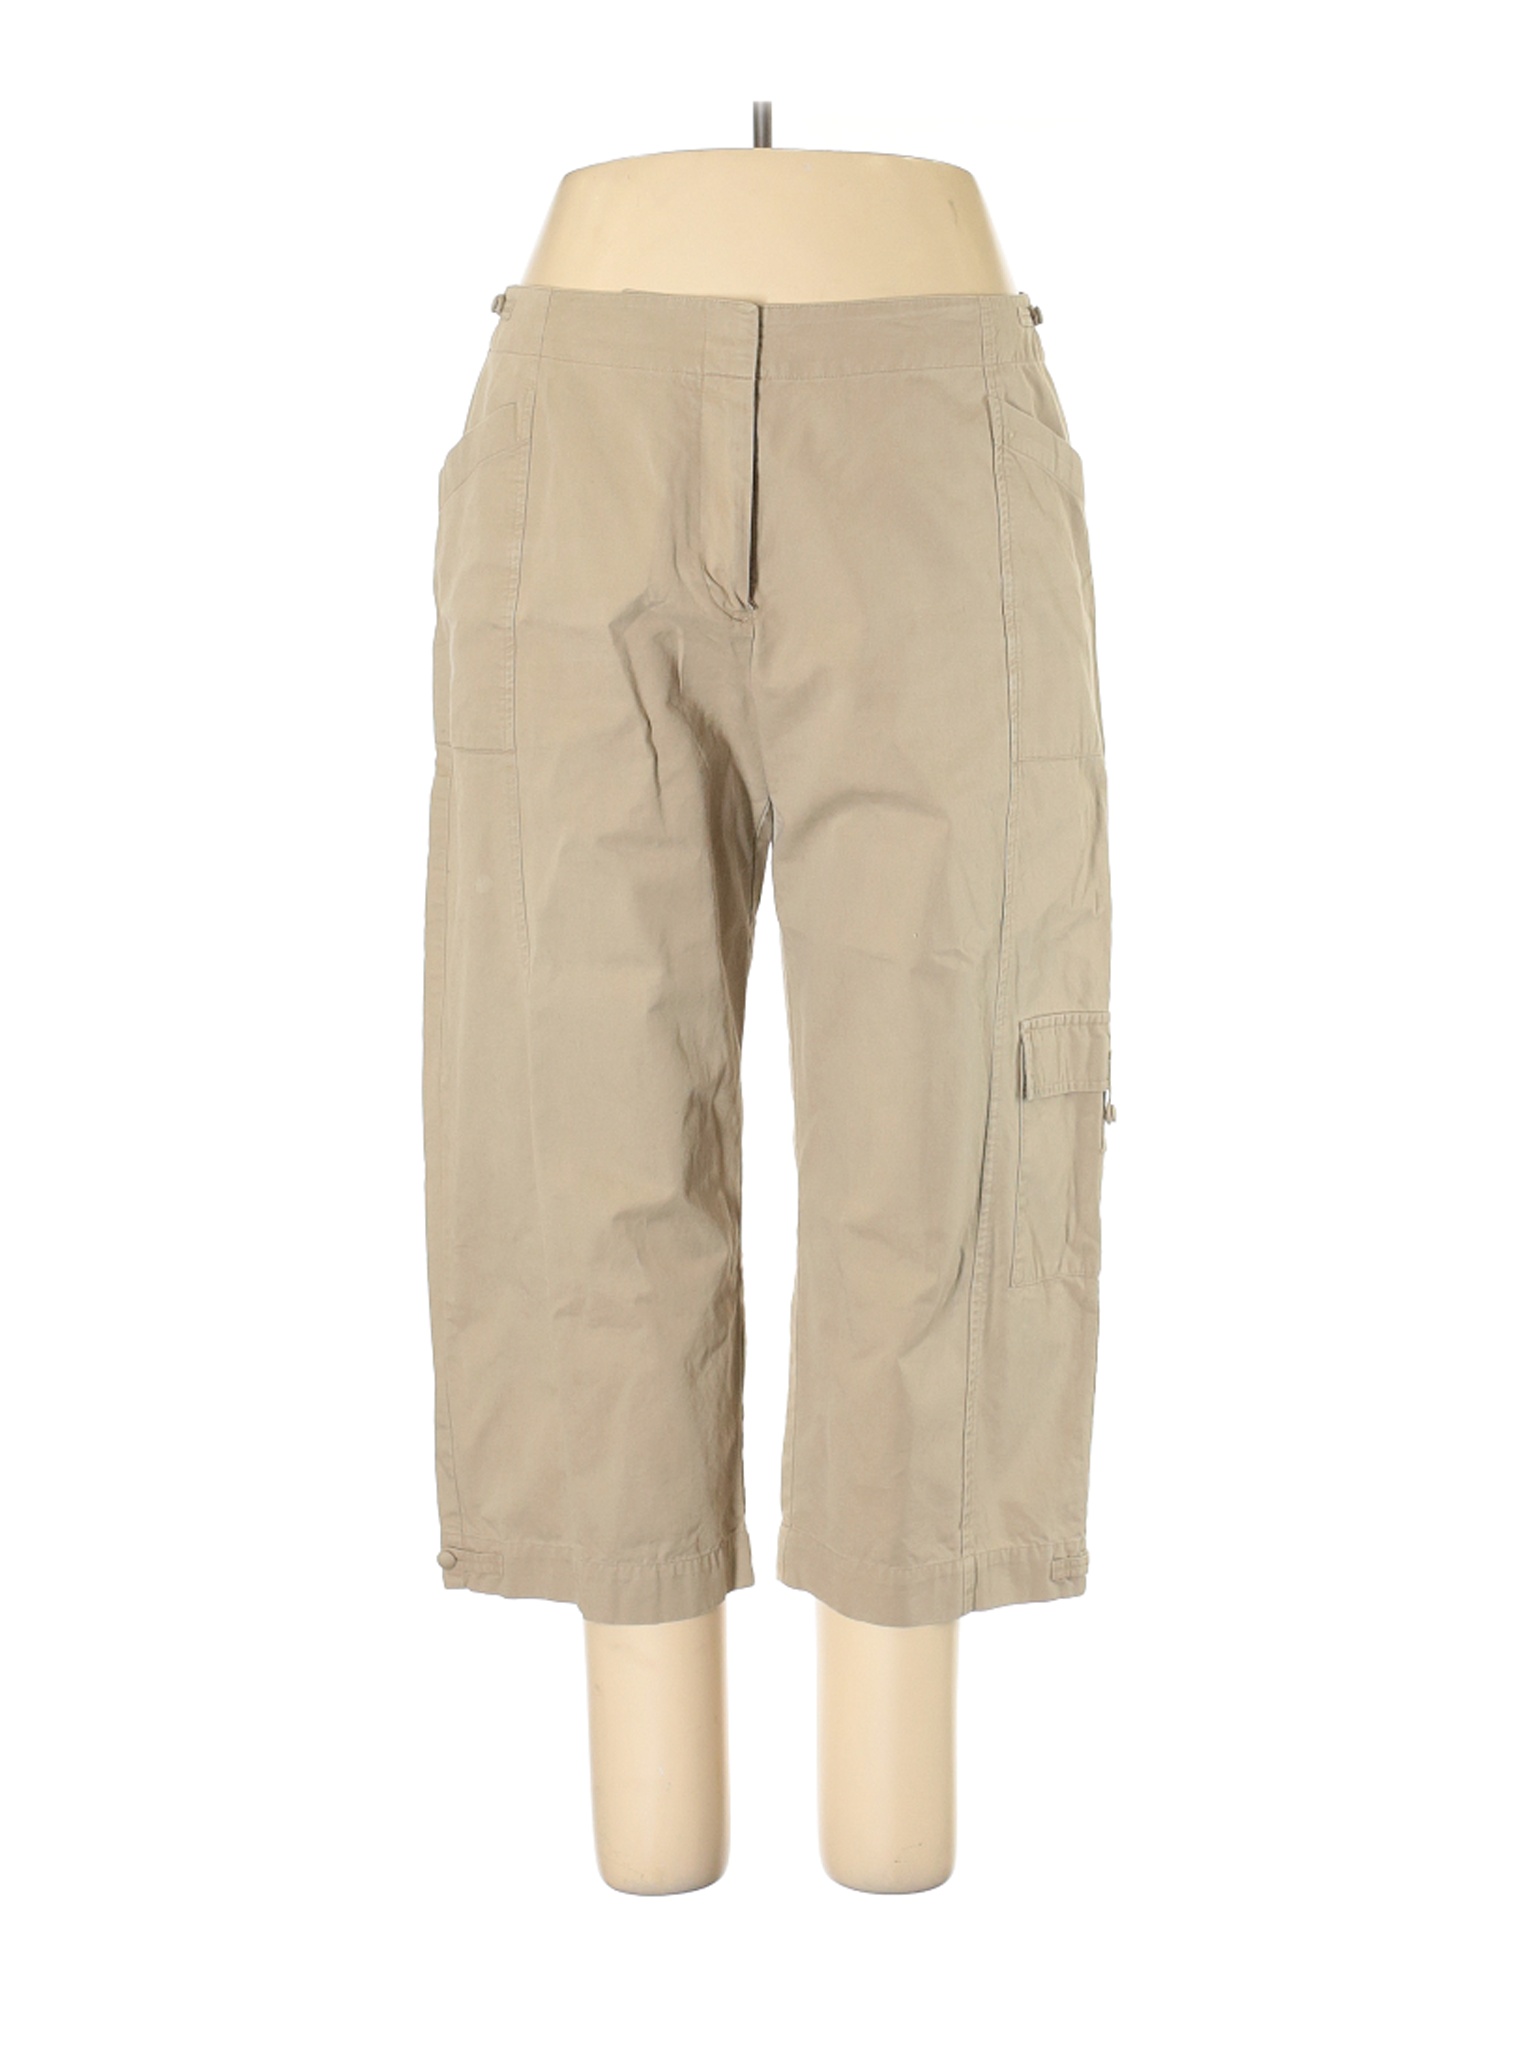 J.jill Women Brown Cargo Pants 16 Petites | eBay